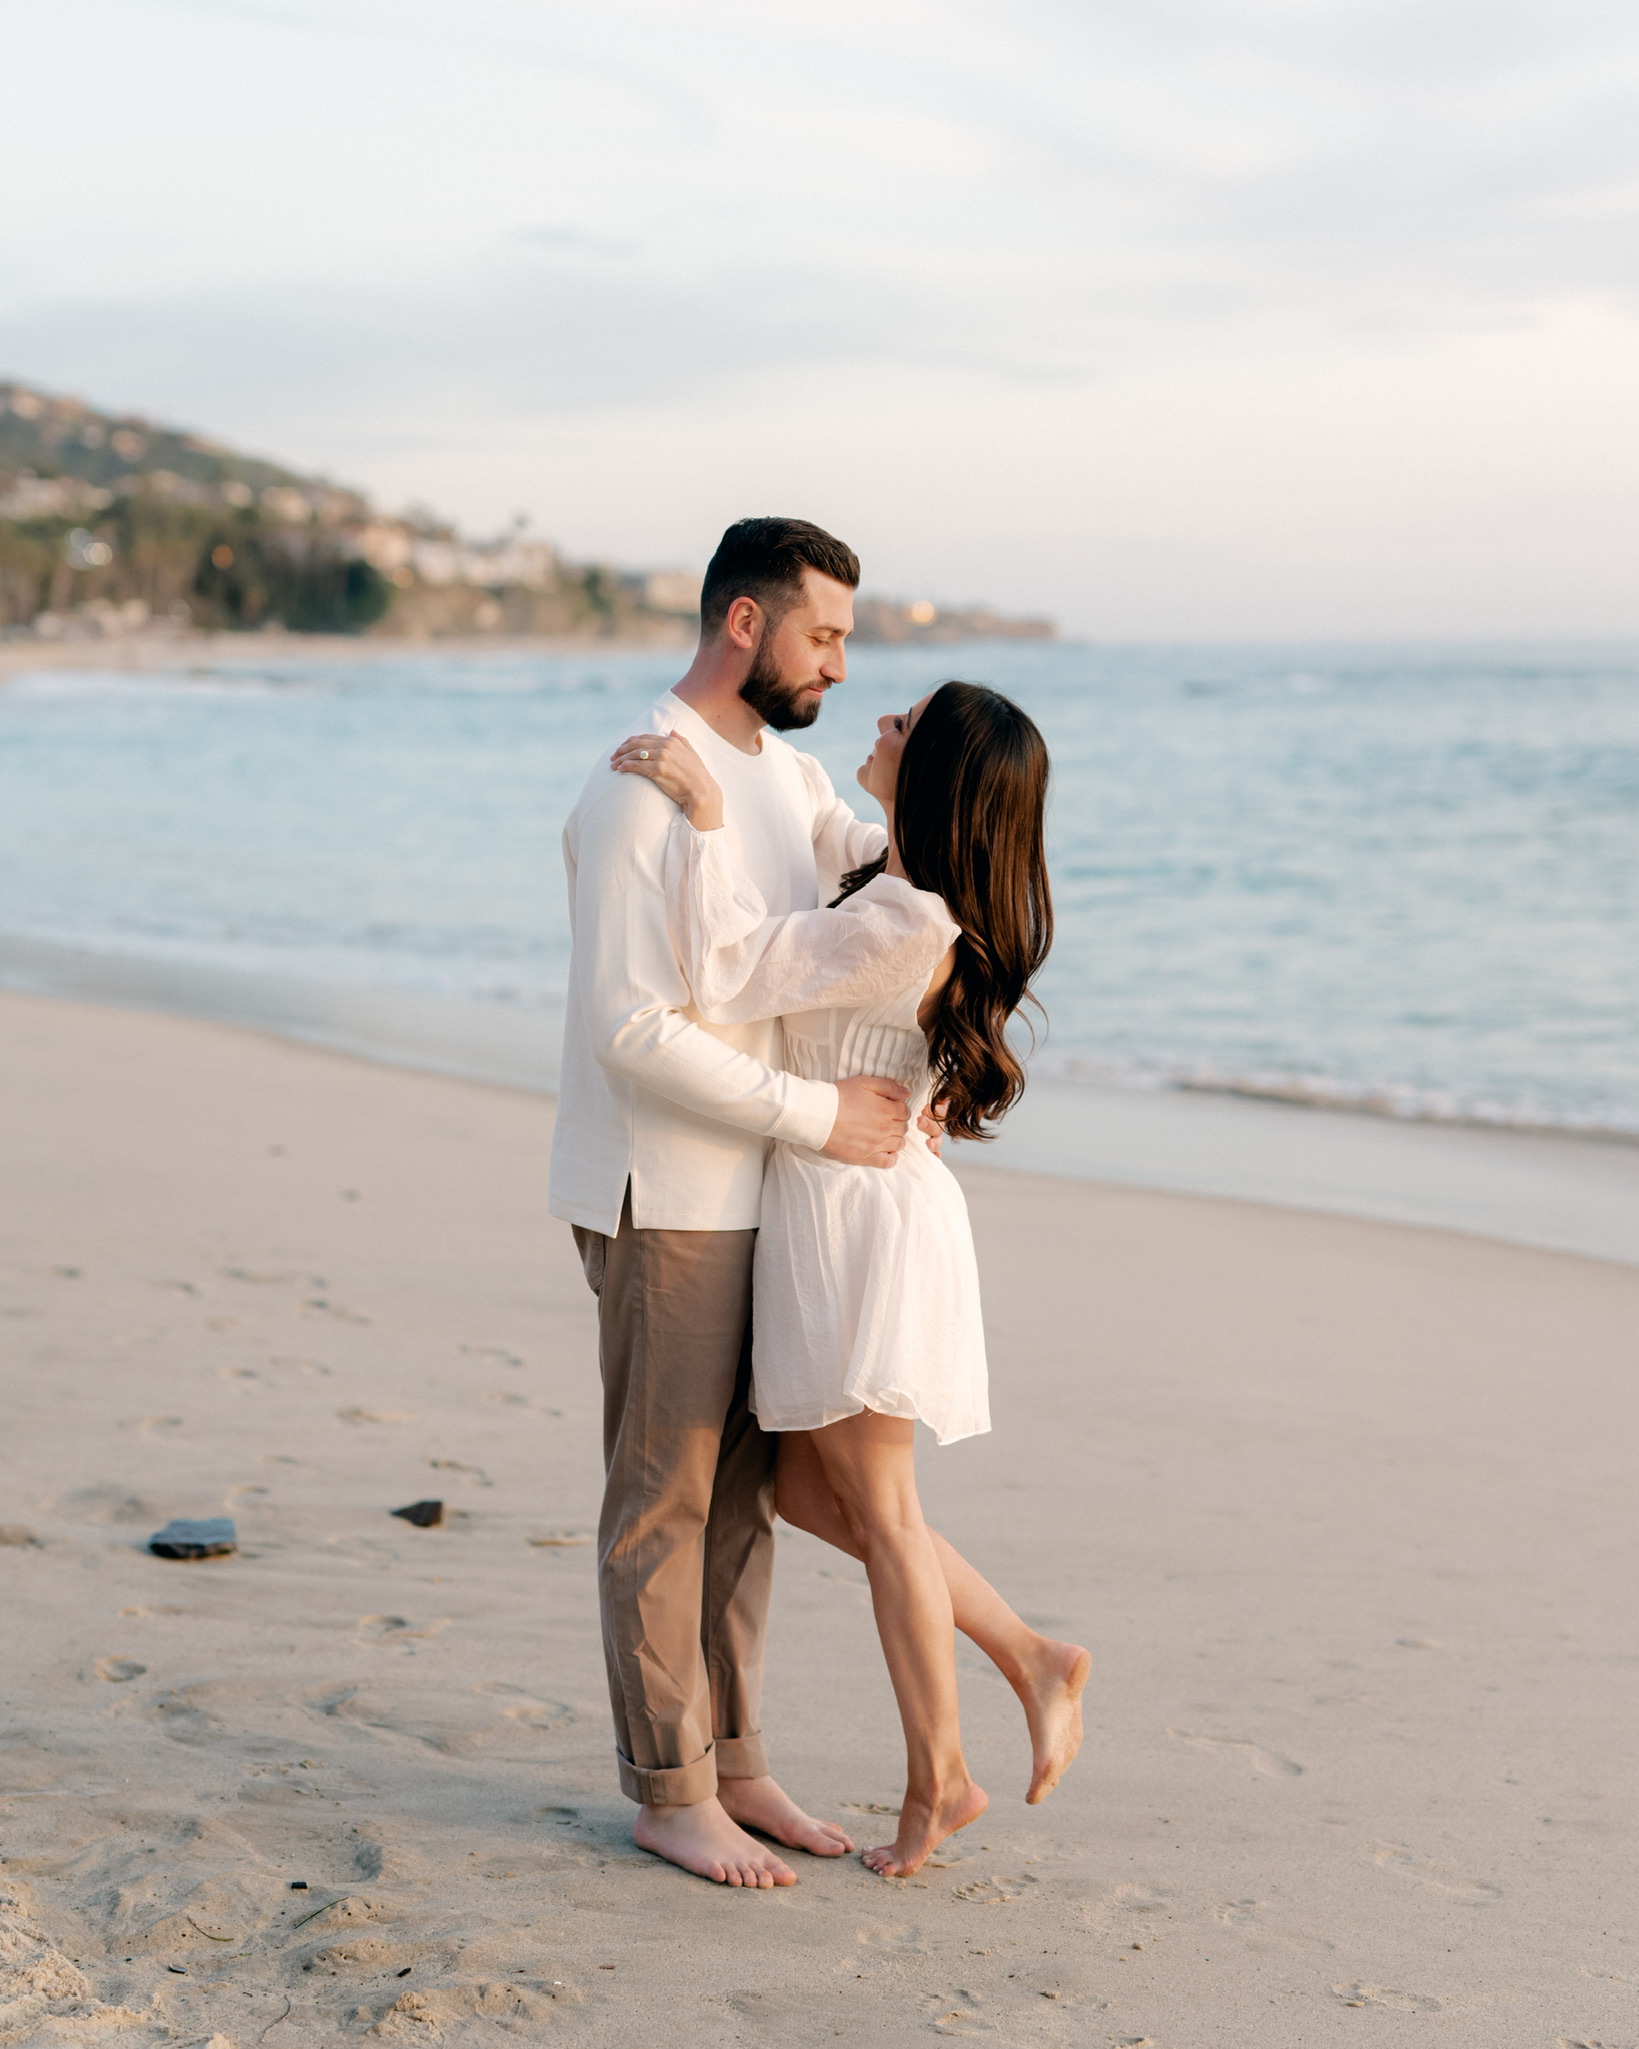 Our Engagement Shoot in Laguna Beach